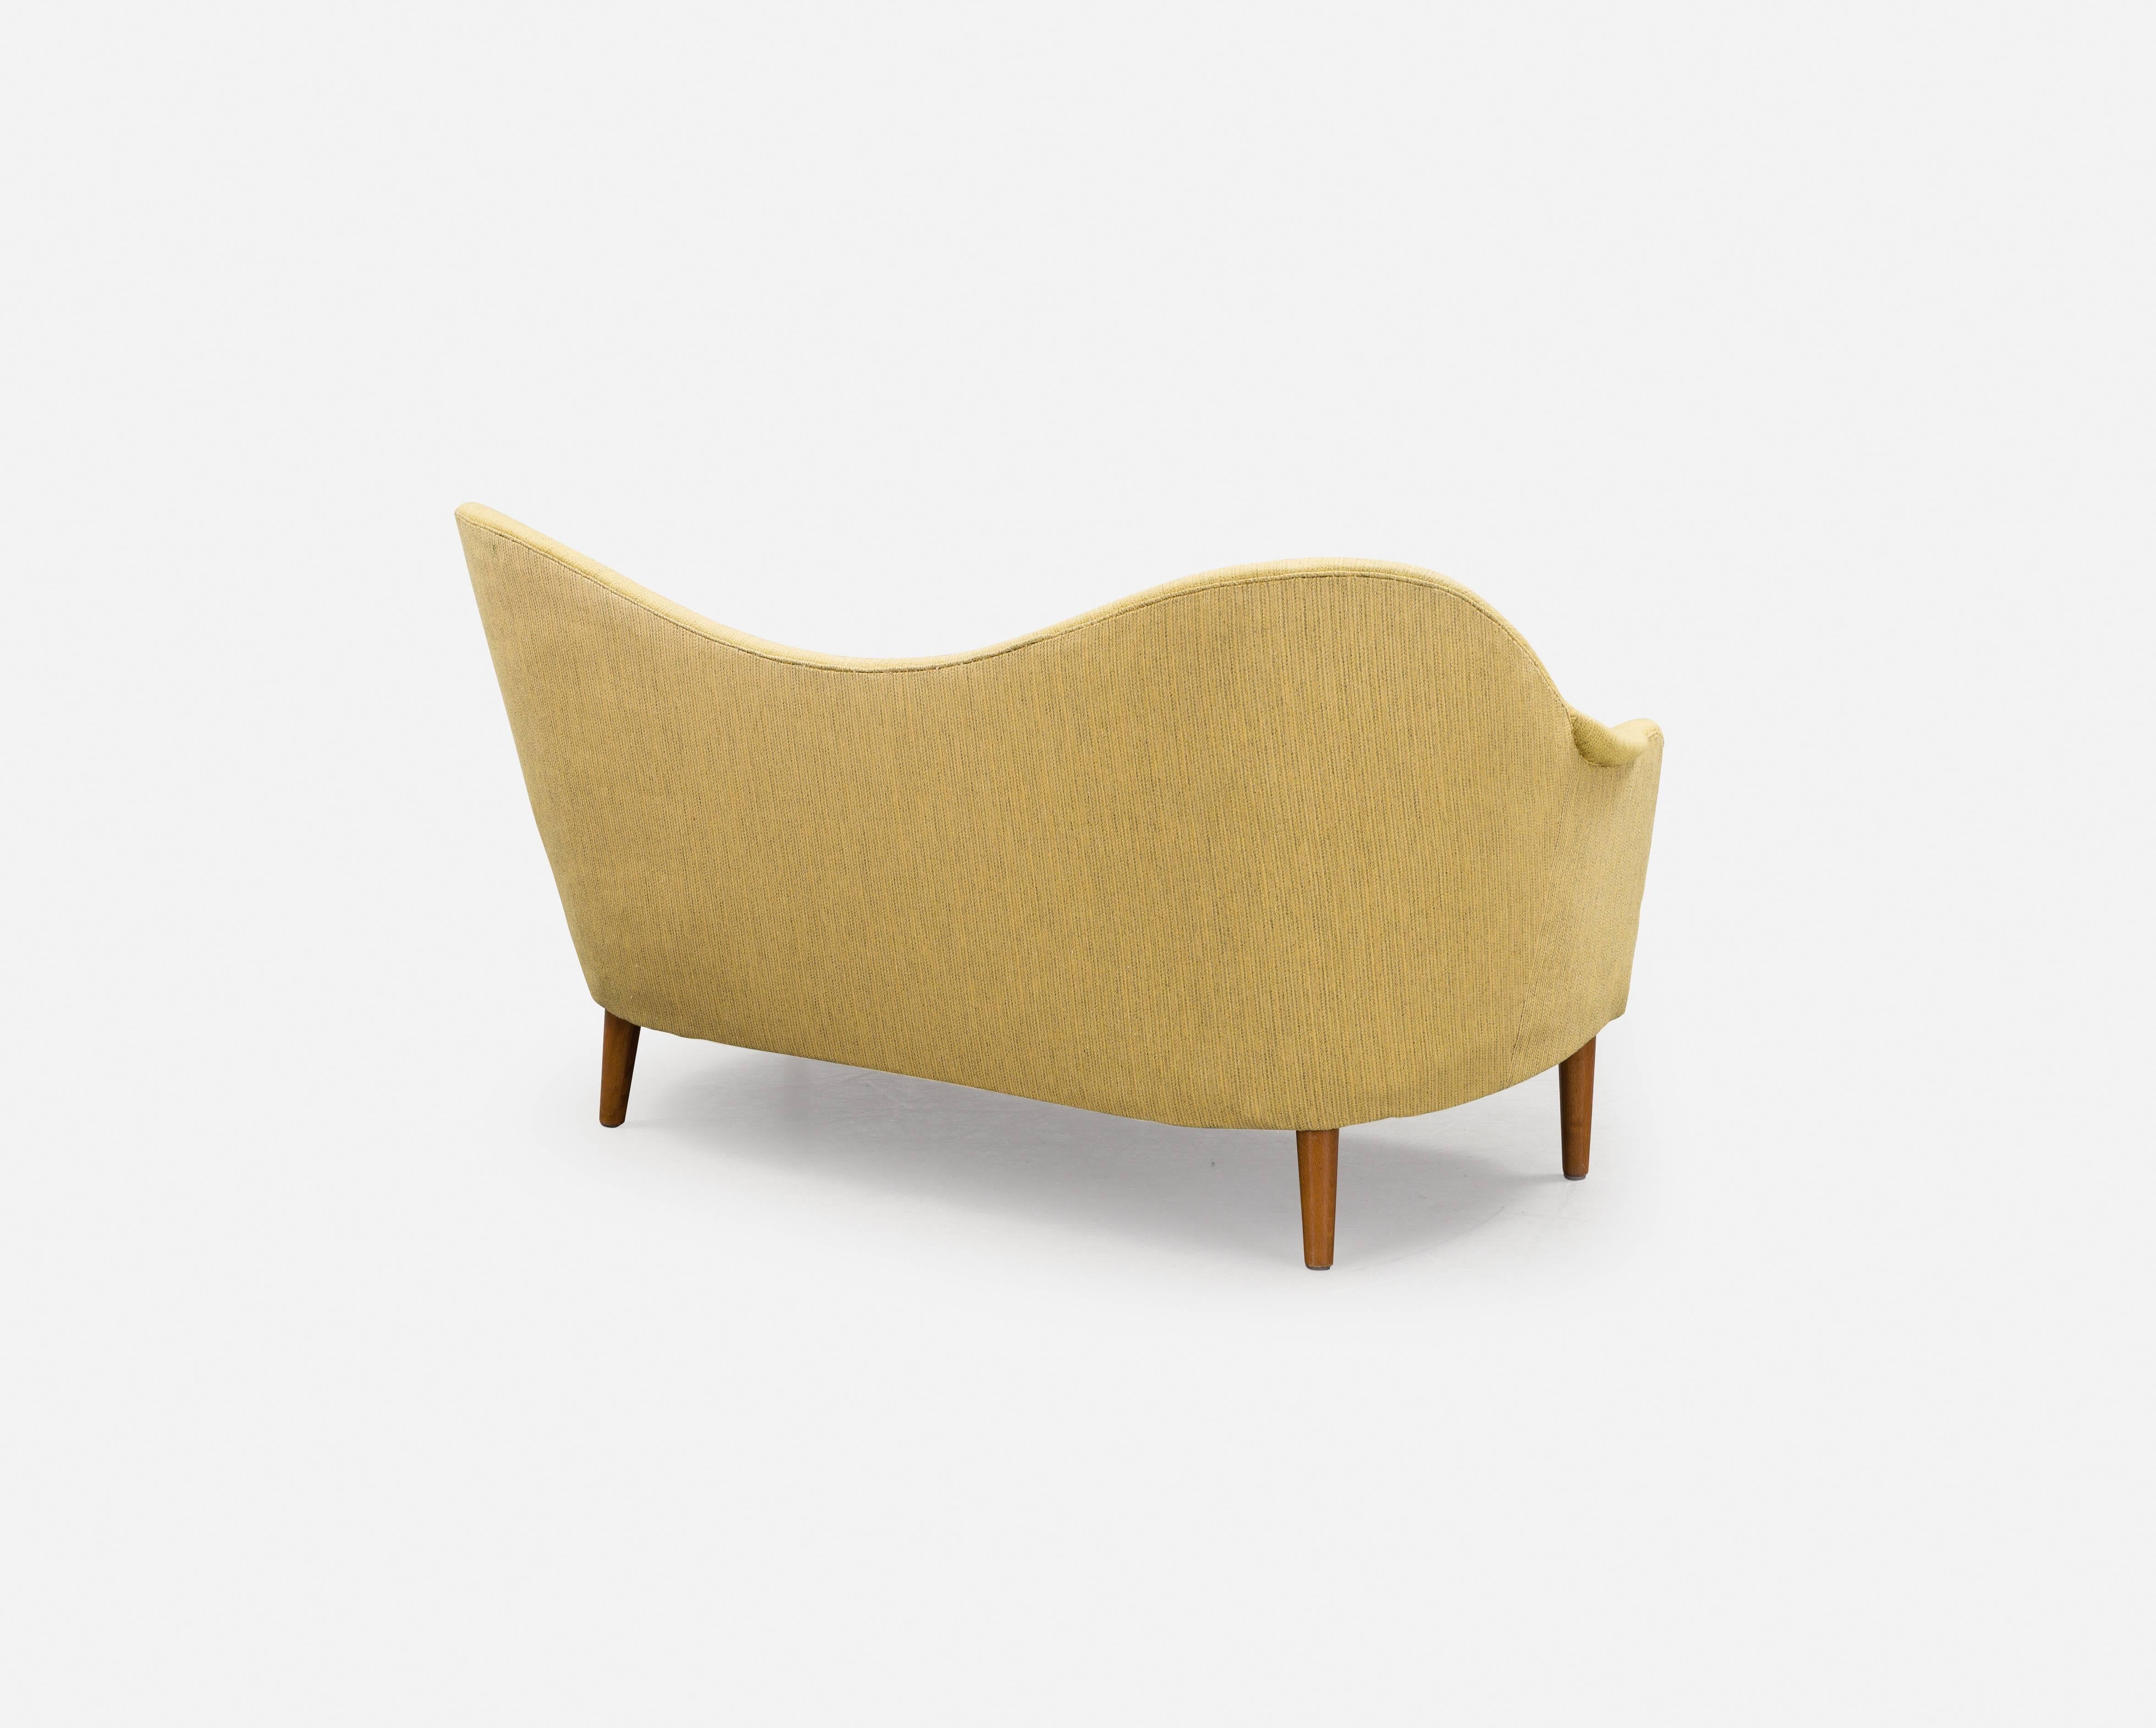 Mid-Century Modern Carl Malmsten curved yellow Samspel sofa / loveseat, mid 20th Century, Sweden.